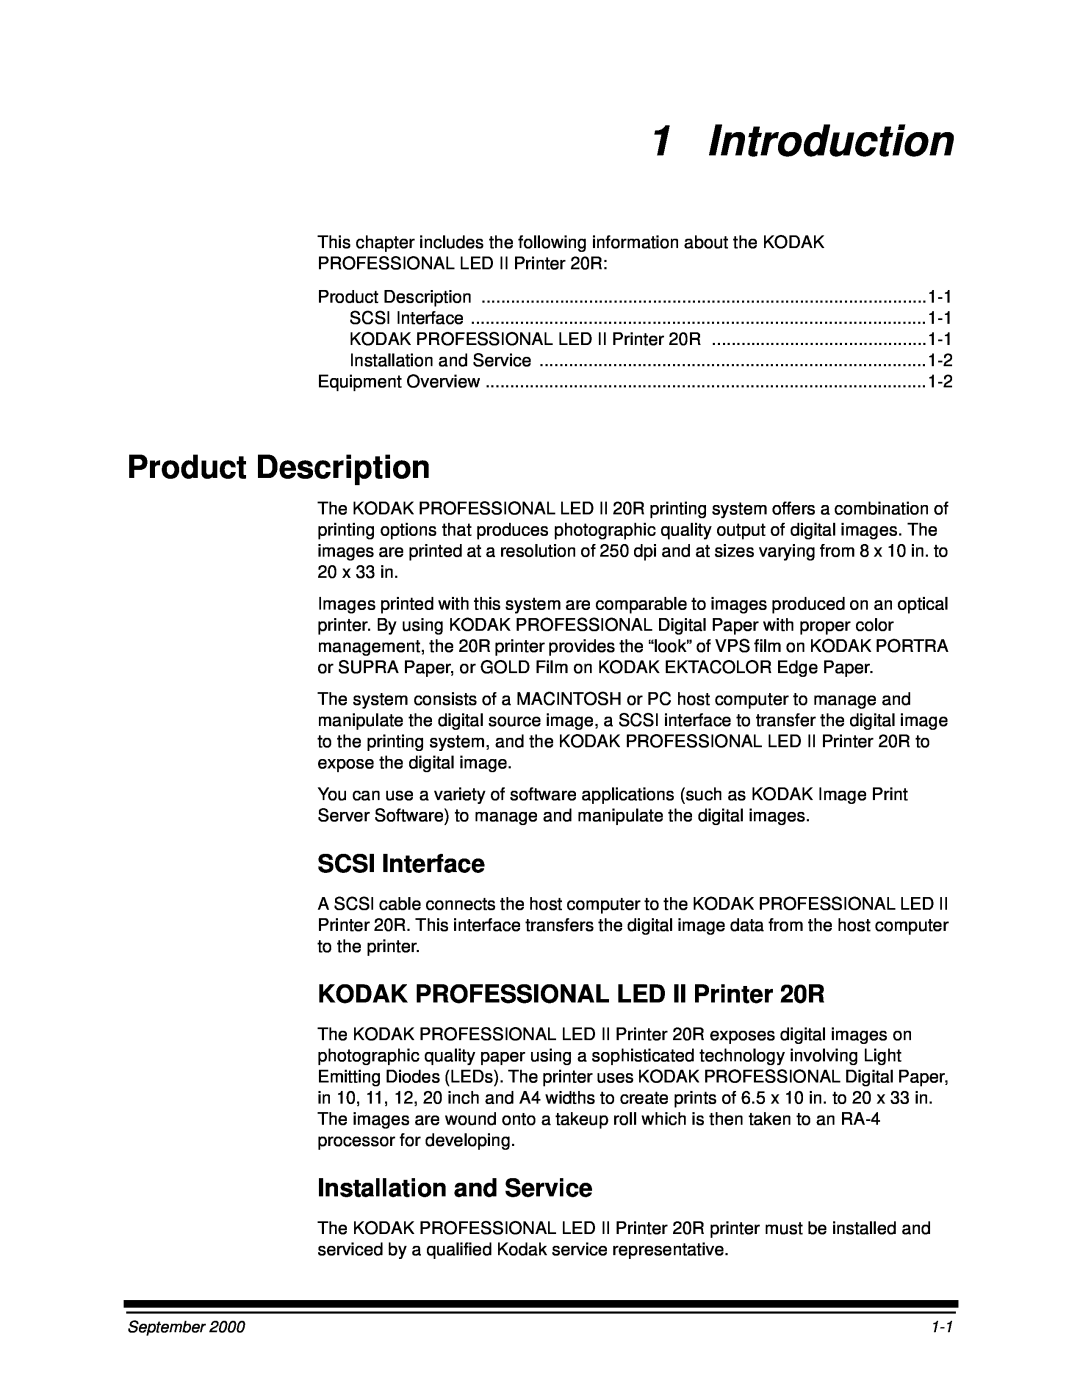 Kodak manual Introduction, Product Description, SCSI Interface, KODAK PROFESSIONAL LED II Printer 20R 